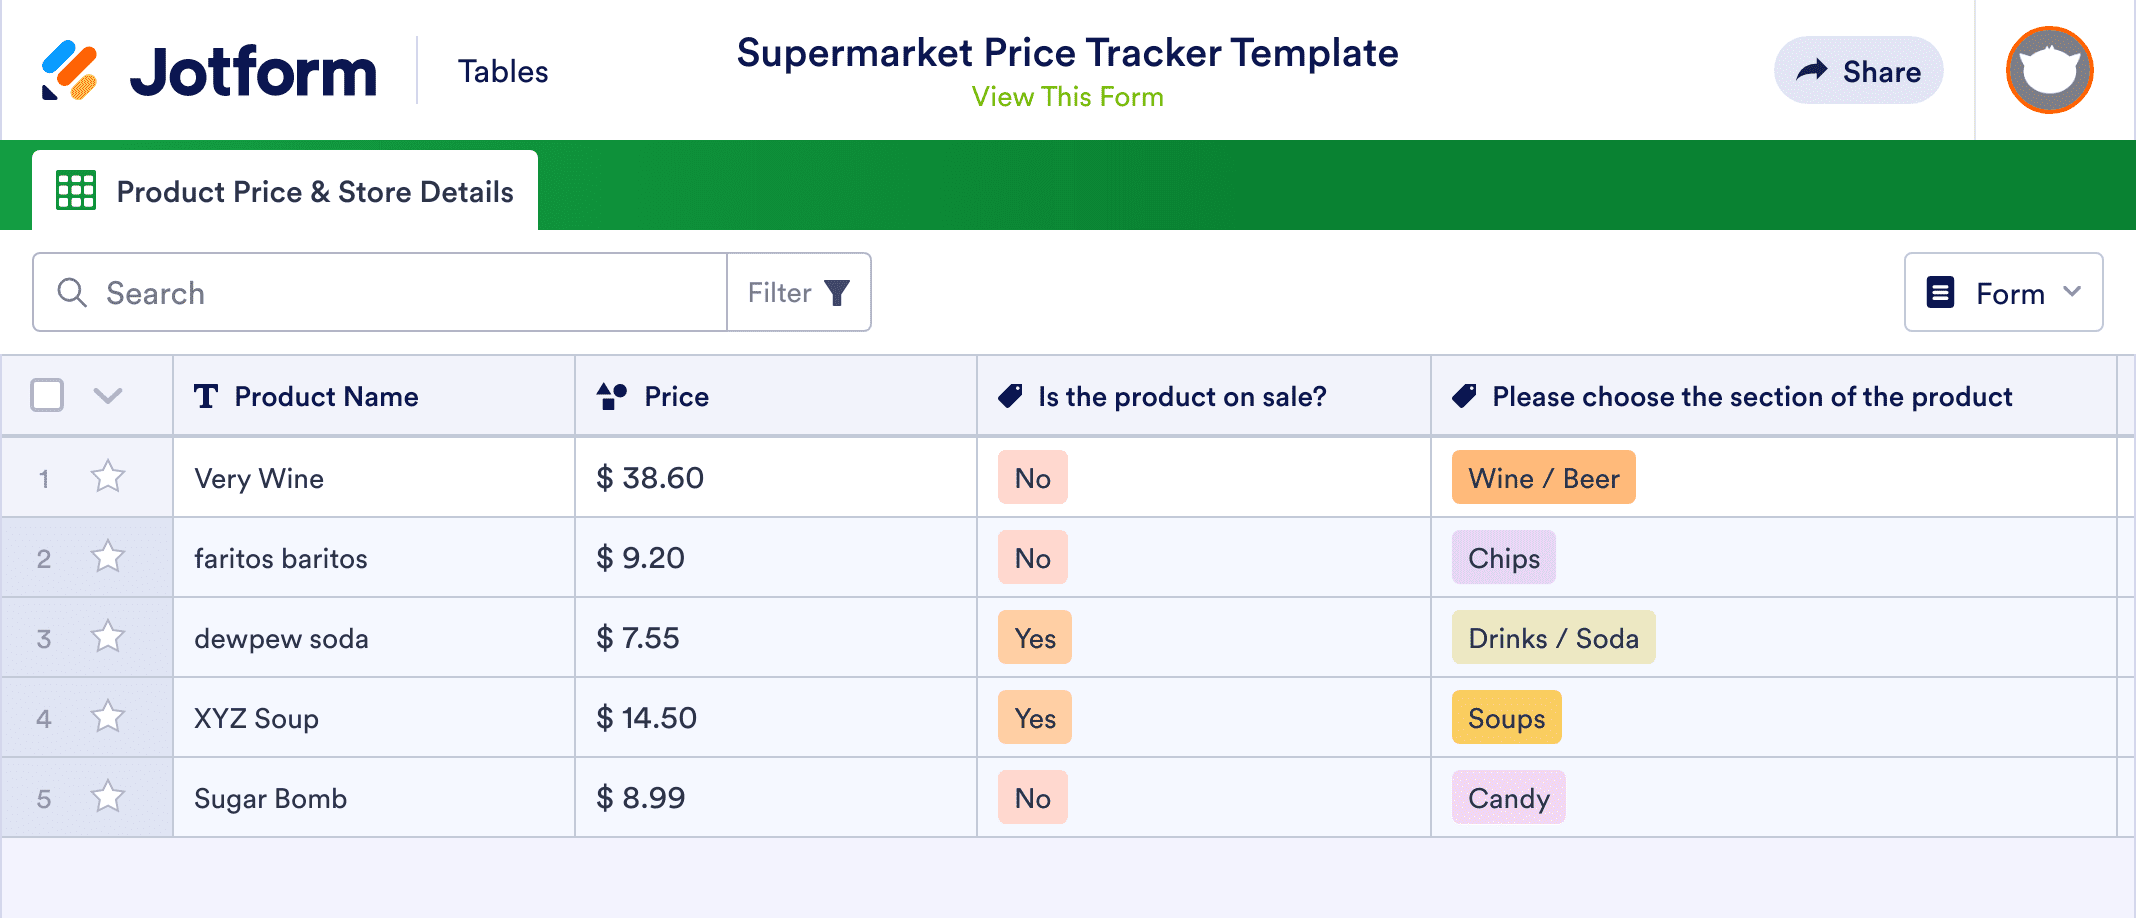 Supermarket Price Tracker Template